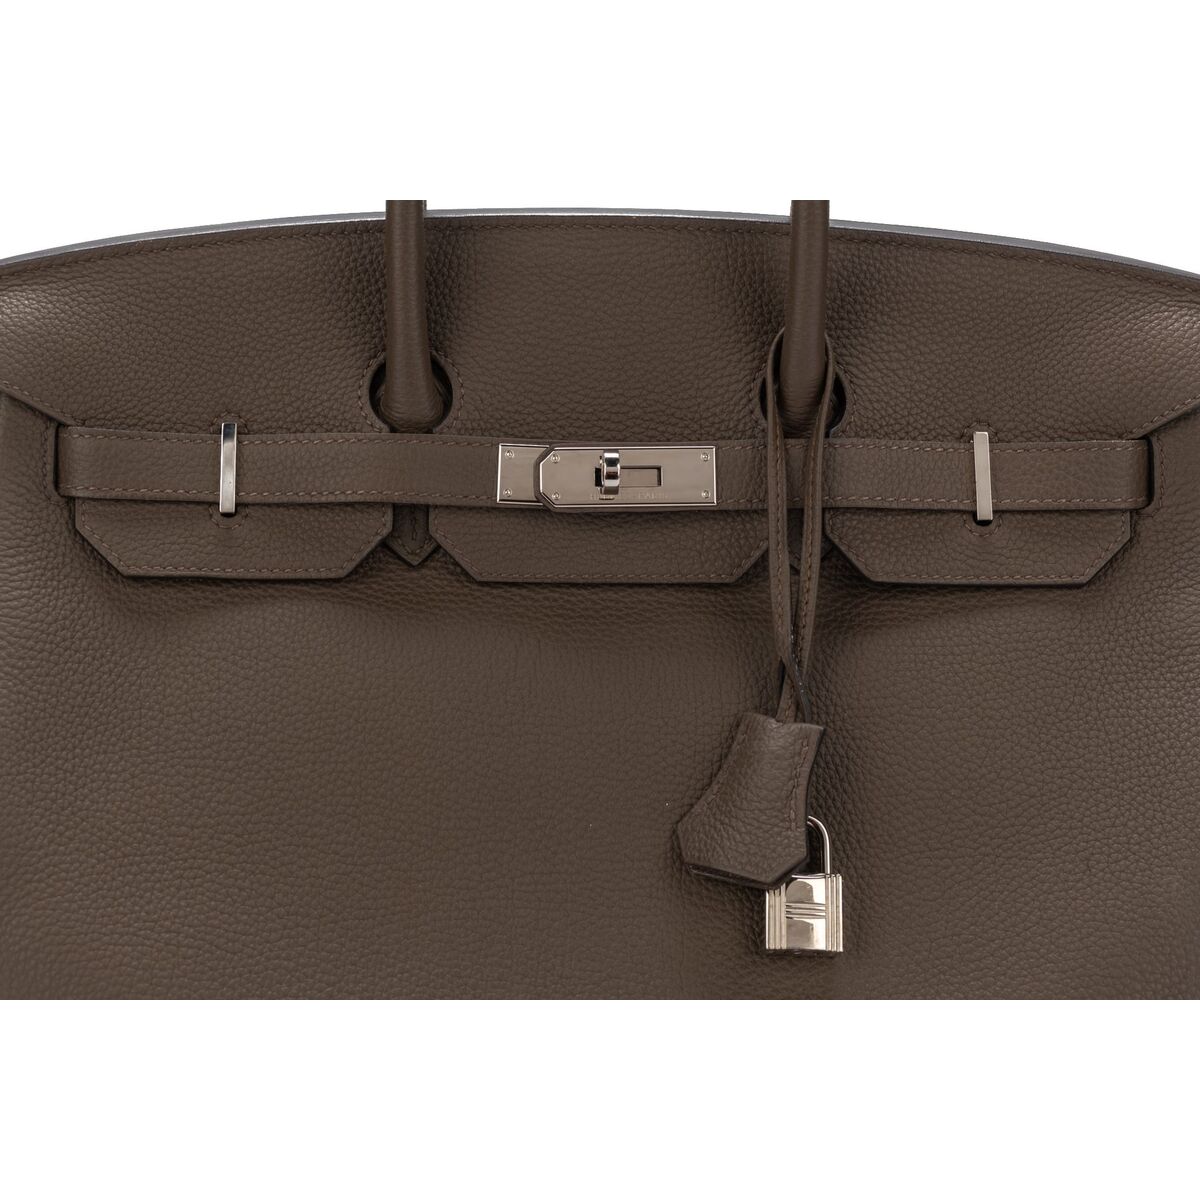 Hermès Birkin 35 cm Bag In Tan Leather PRISTINE CONDITION